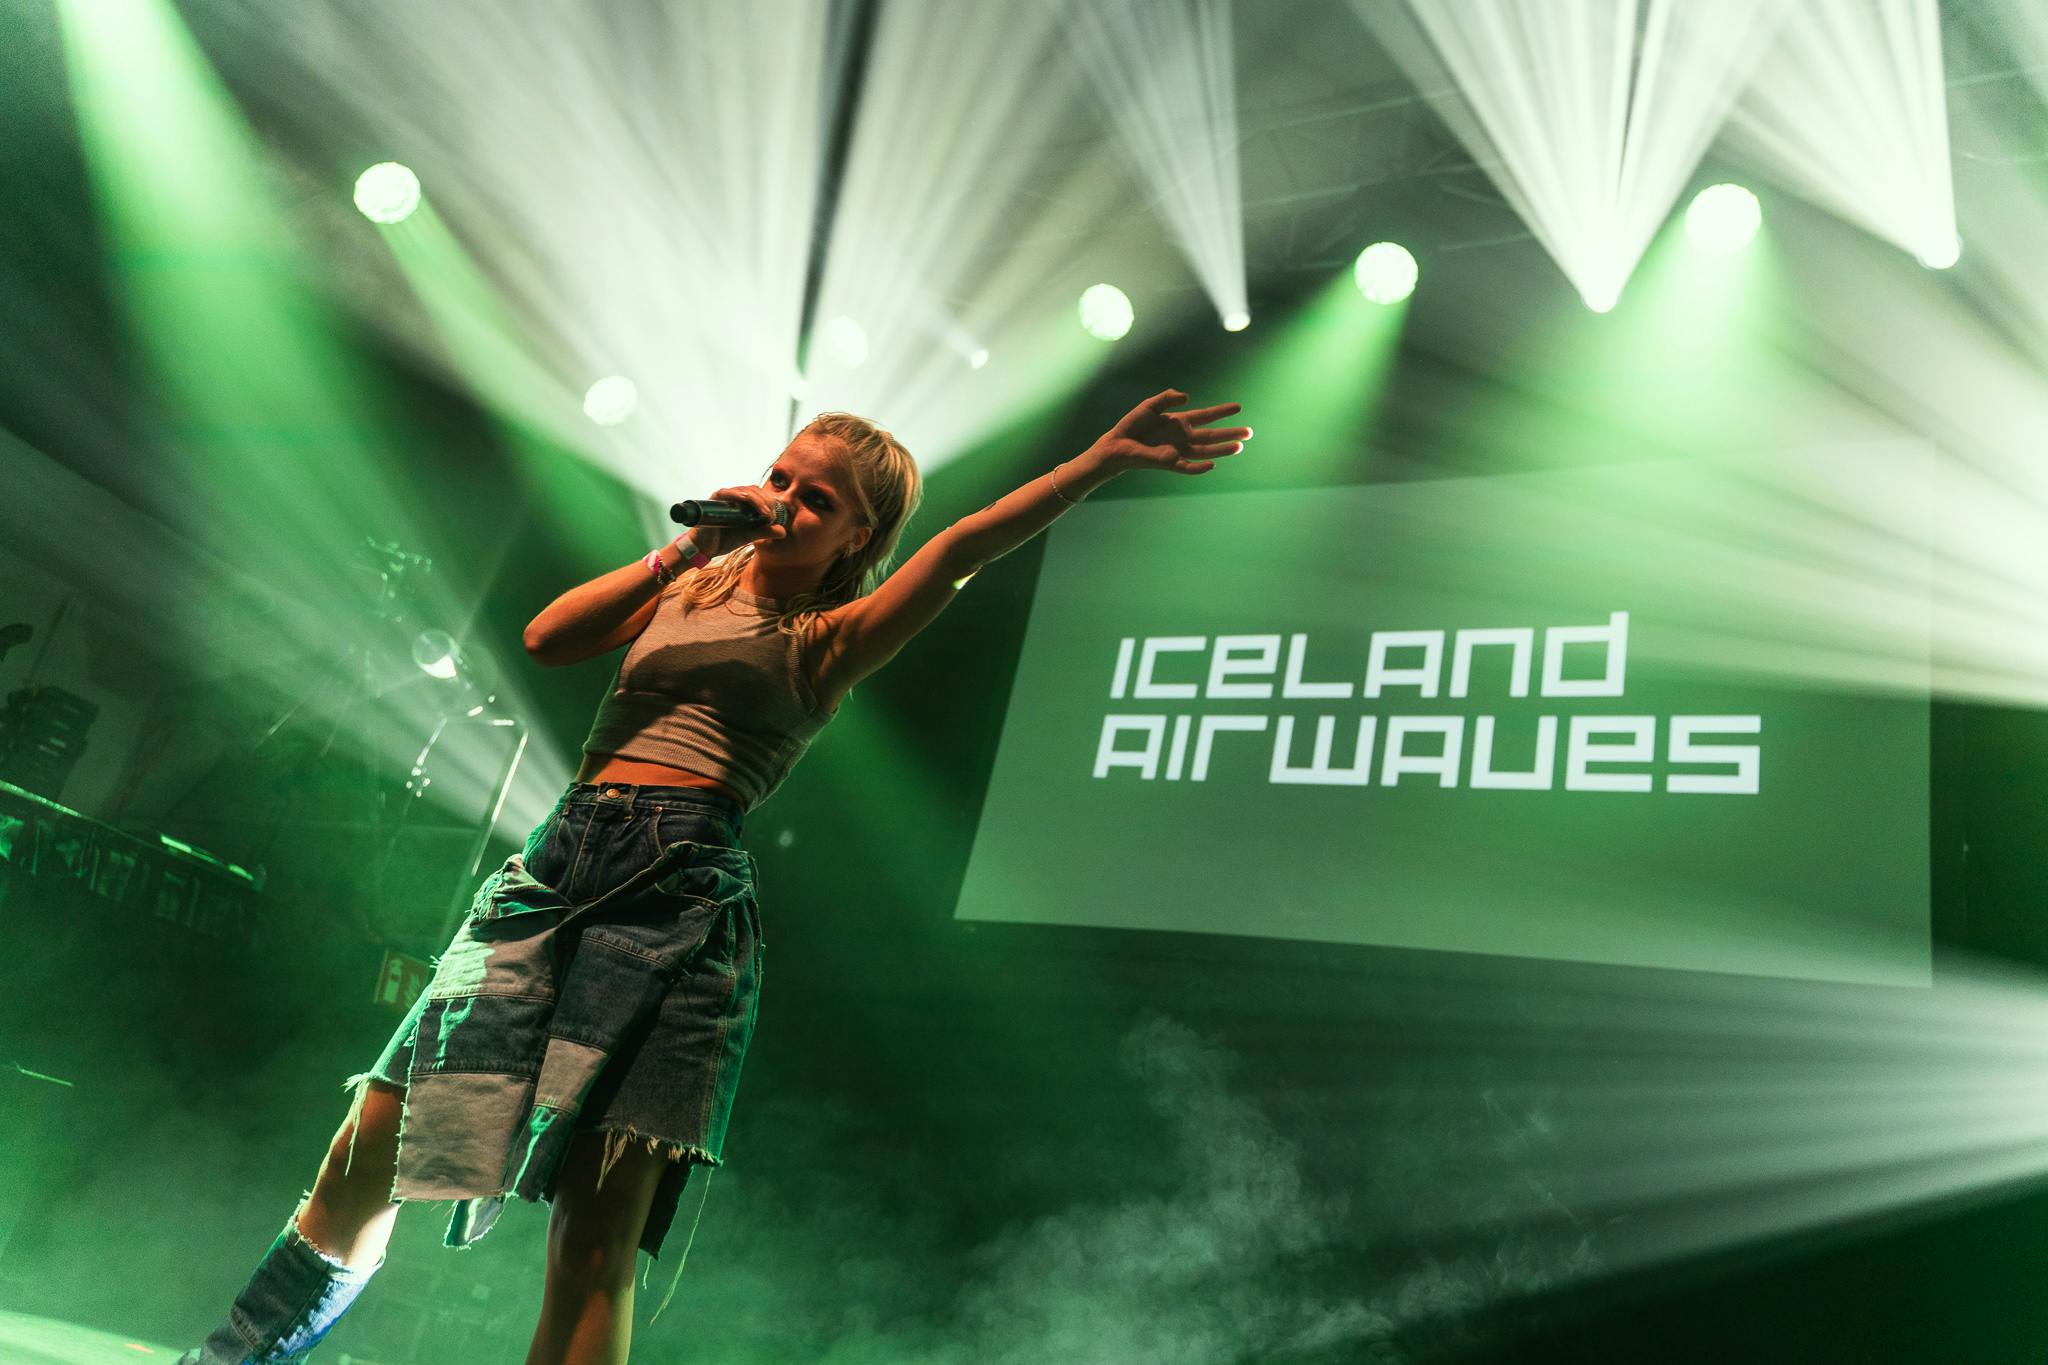 gugusar performing at Iceland Airwaves